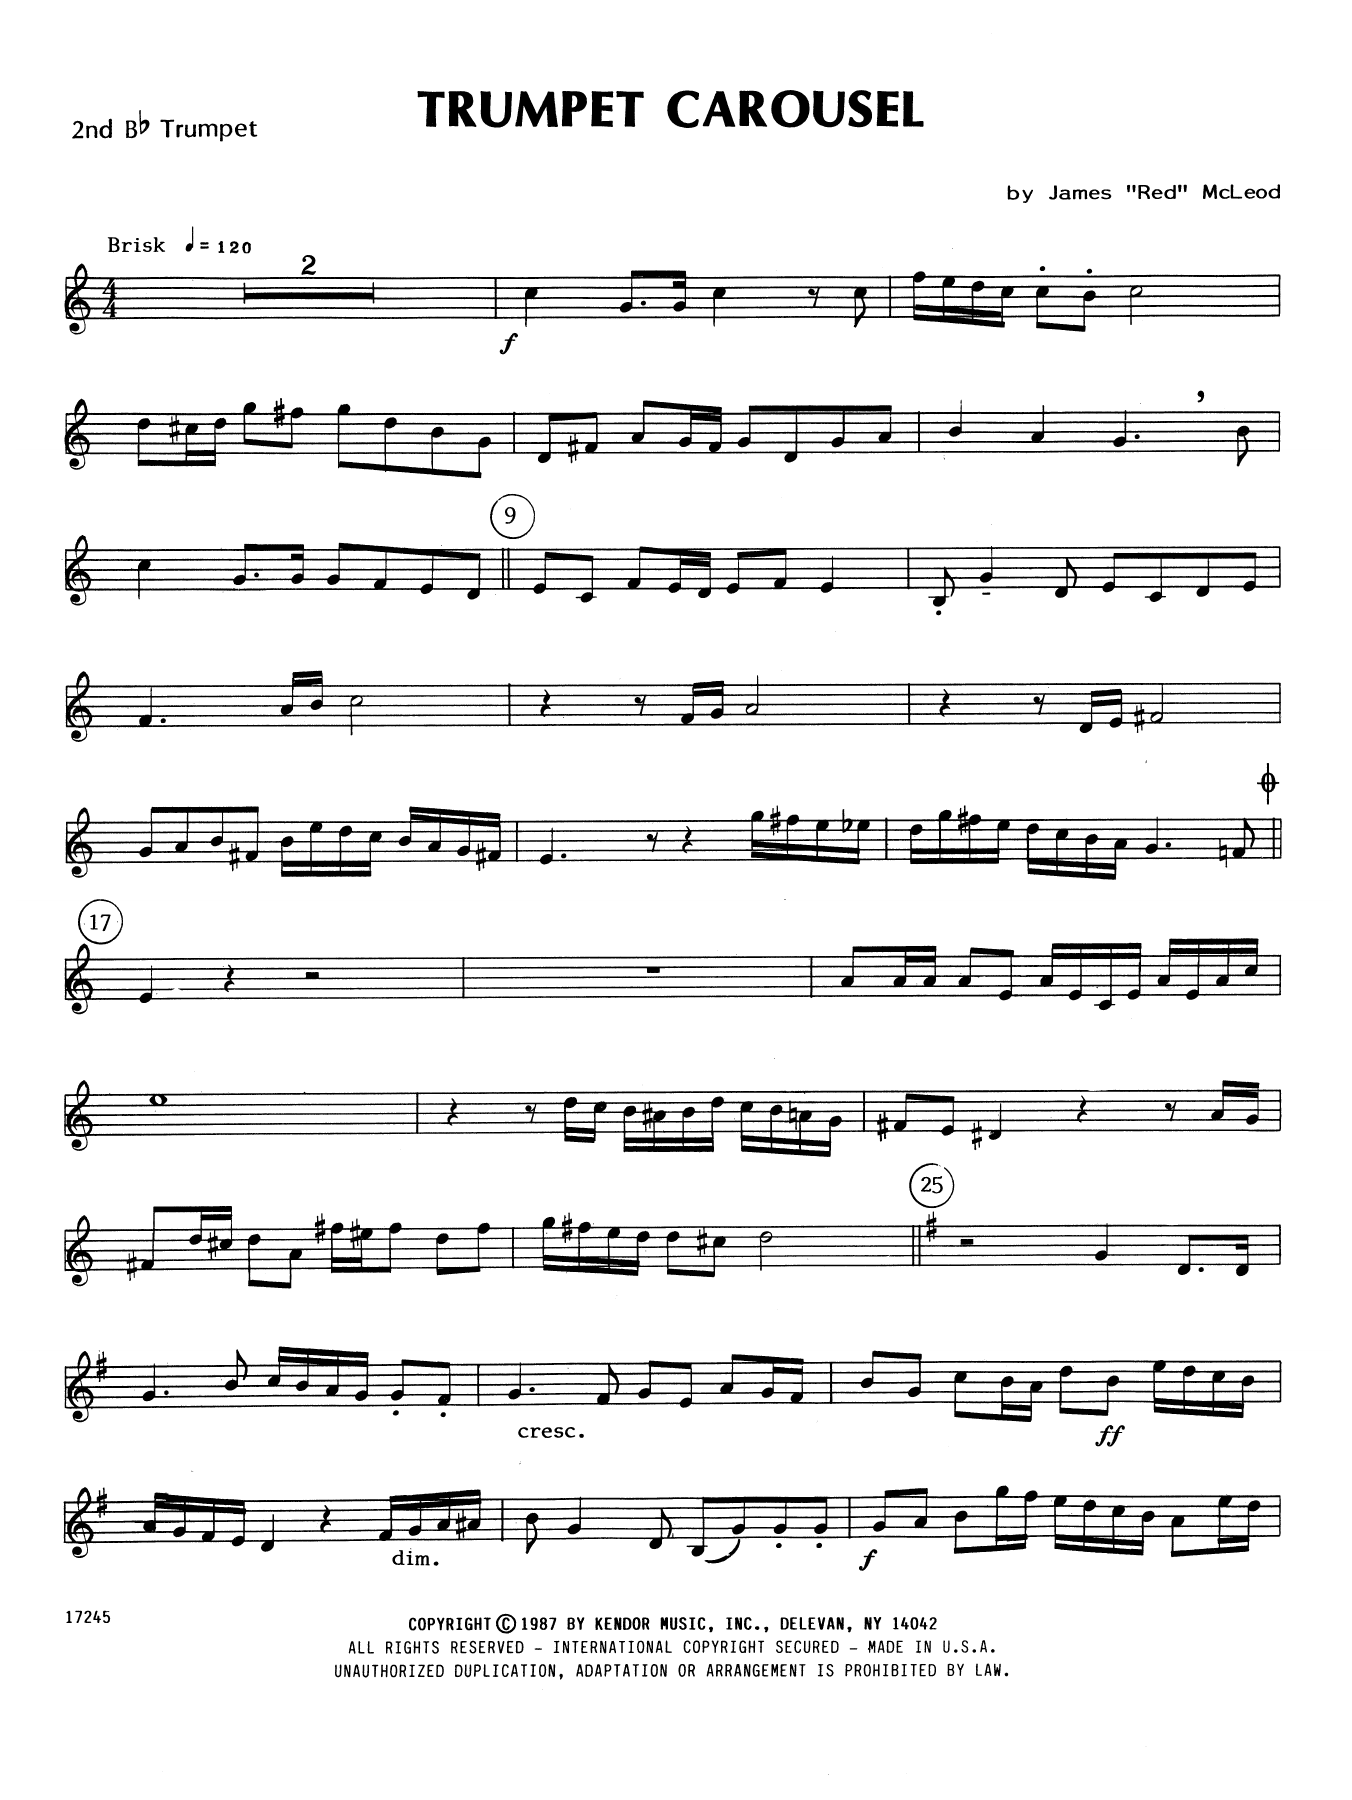 Download James 'Red' McLeod Trumpet Carousel - 2nd Bb Trumpet Sheet Music